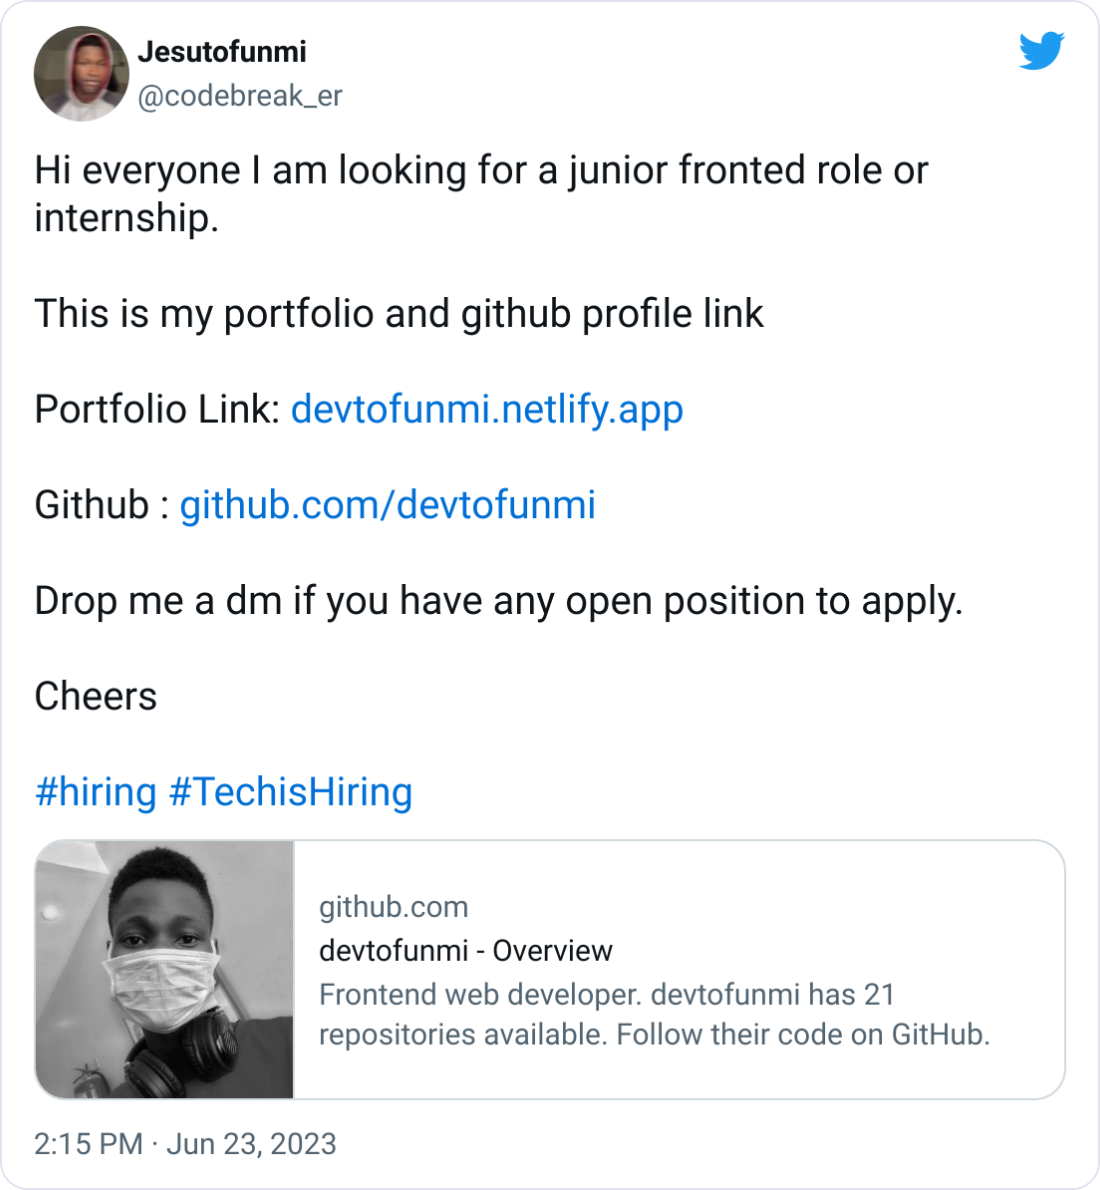 Jesutofunmi @codebreak_er Hi everyone I am looking for a junior fronted role or internship.  This is my portfolio and github profile link   Portfolio Link: https://devtofunmi.netlify.app  Github : https://github.com/devtofunmi  Drop me a dm if you have any open position to apply.  Cheers  #hiring #TechisHiring